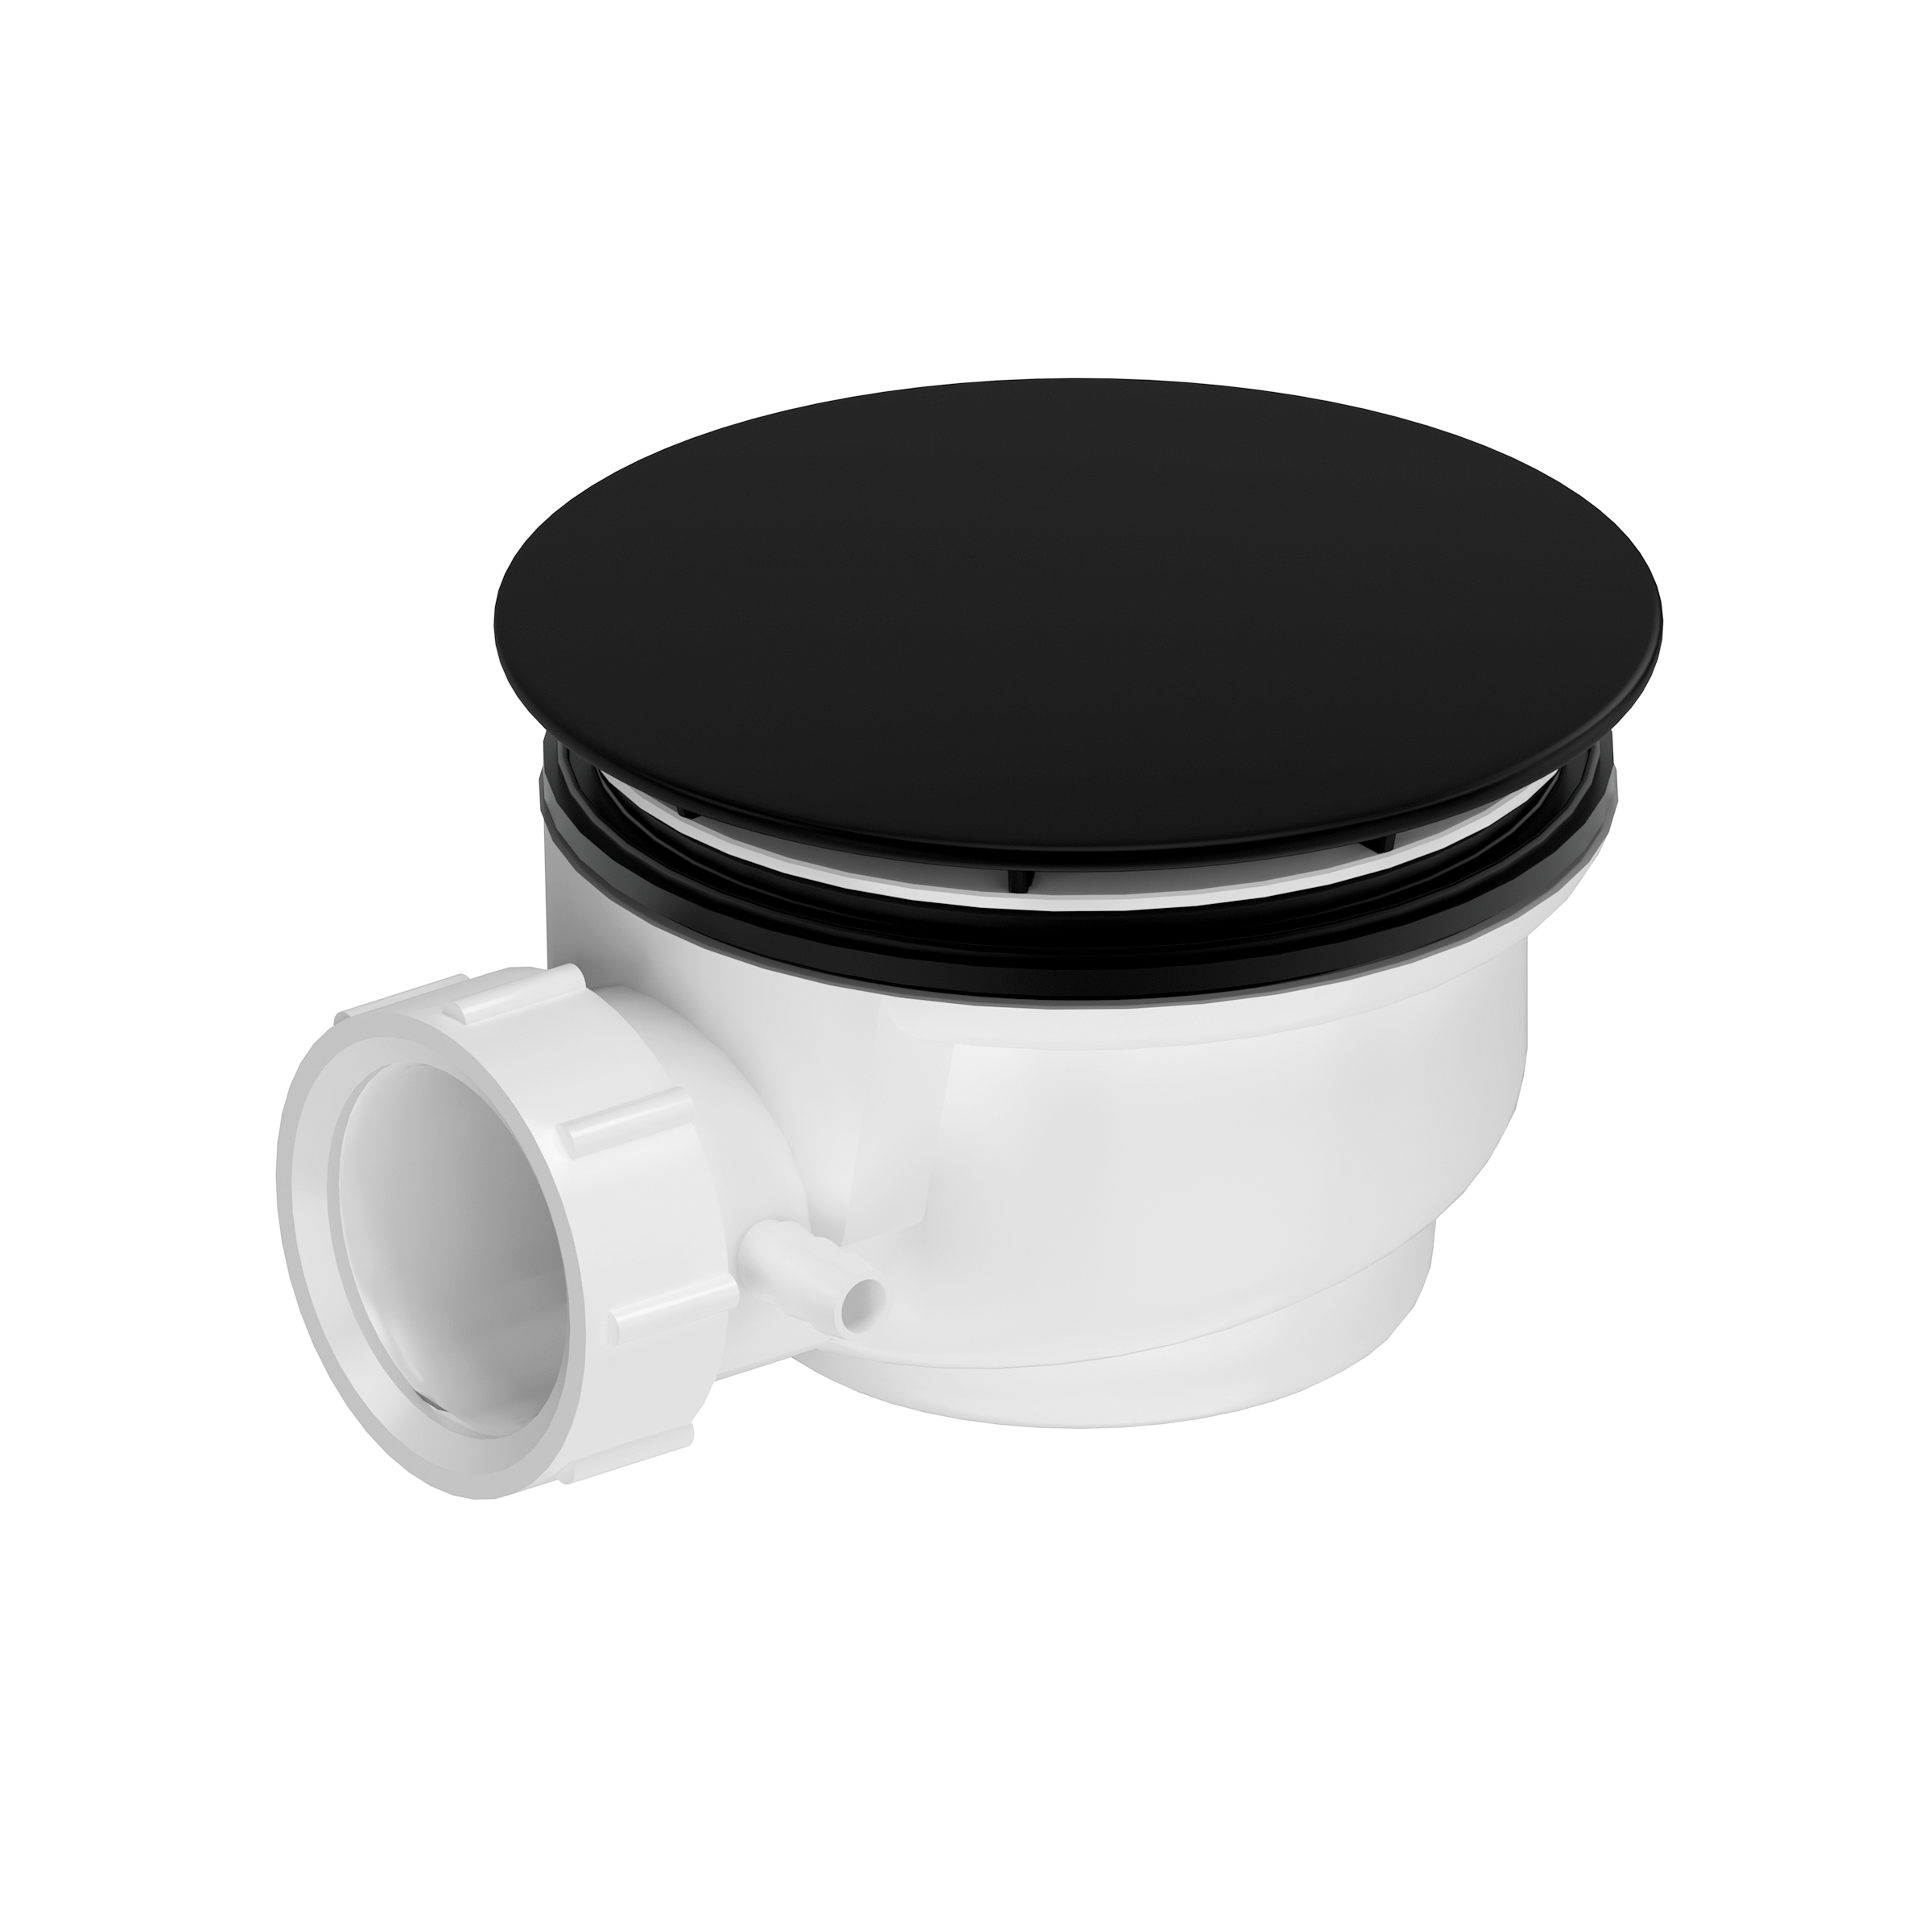 Capot abs noir bonde extra-plate de receveur de douche, Diam.90 mm,  EQUATION